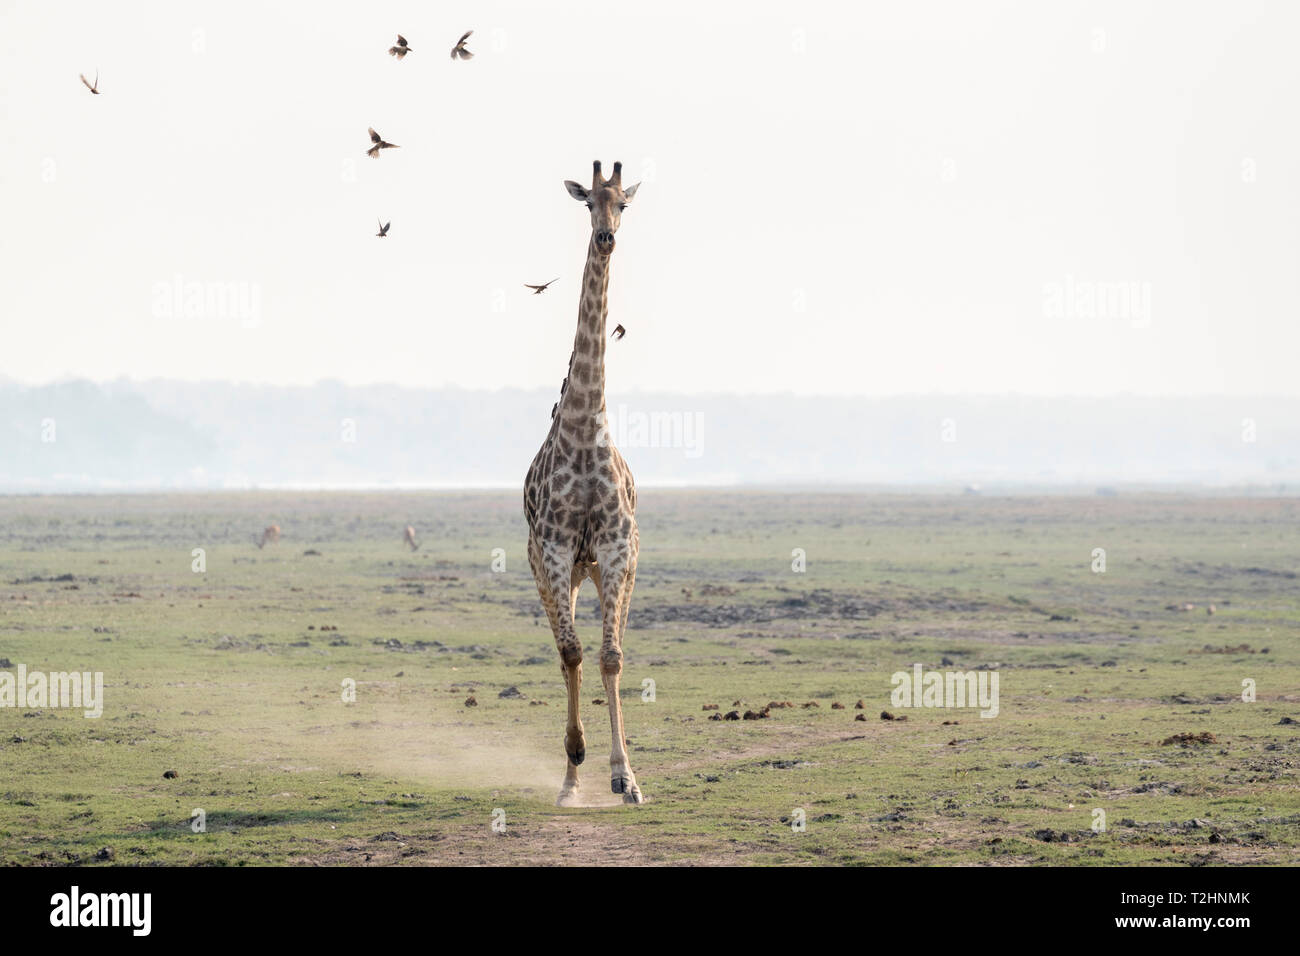 Giraffe, Giraffa camelopardalis, running, Chobe national park, Botswana, Southern Africa Stock Photo